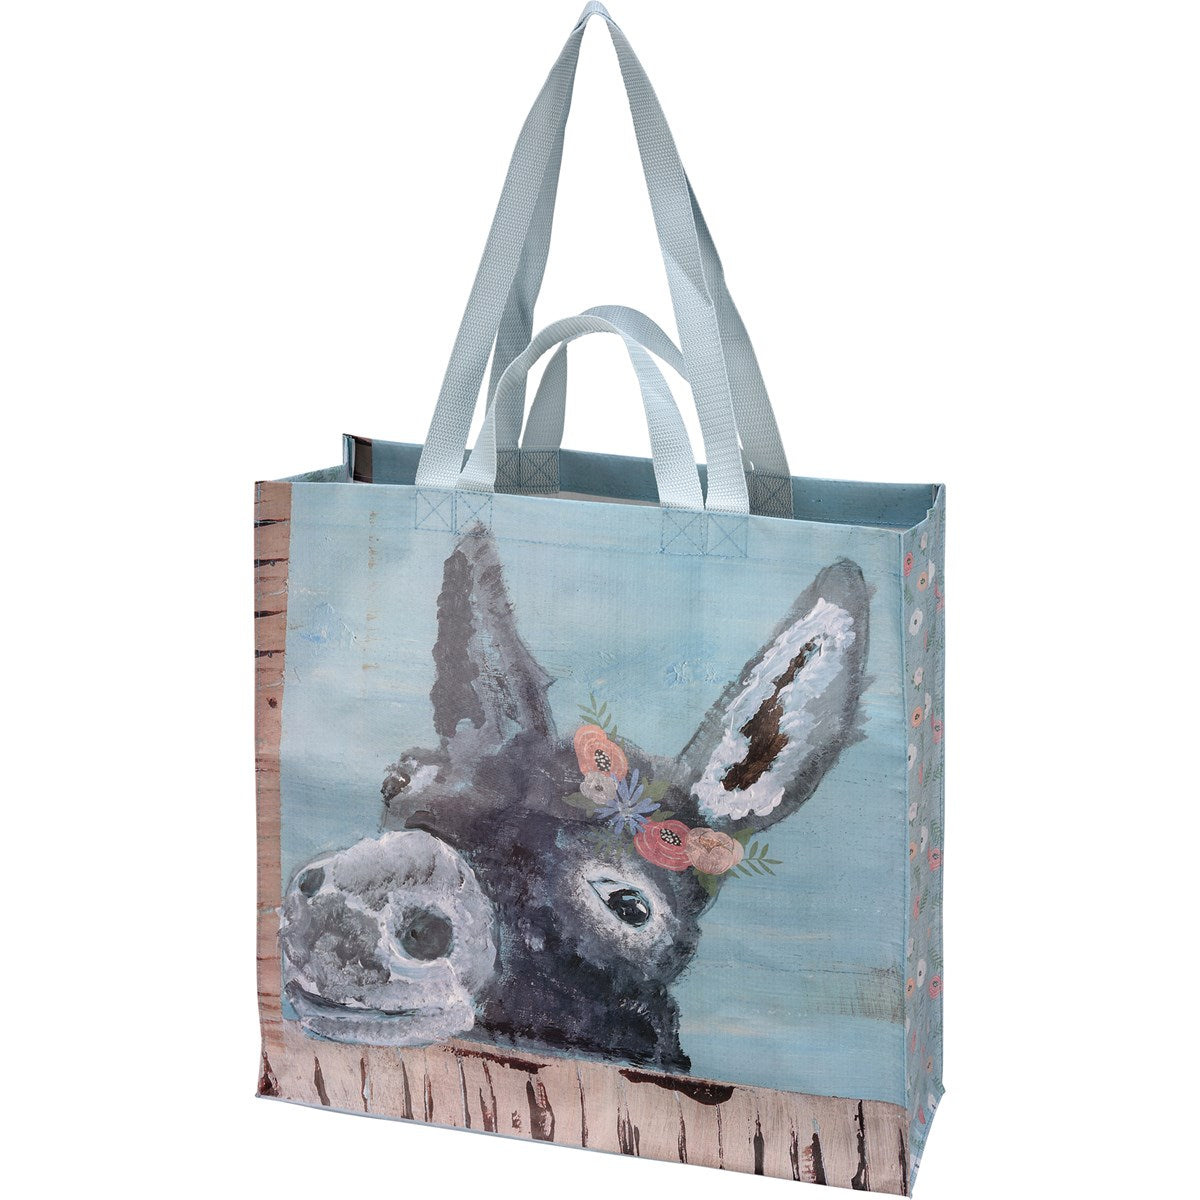 Floral Donkey Market Tote Reusable Shopping Bag